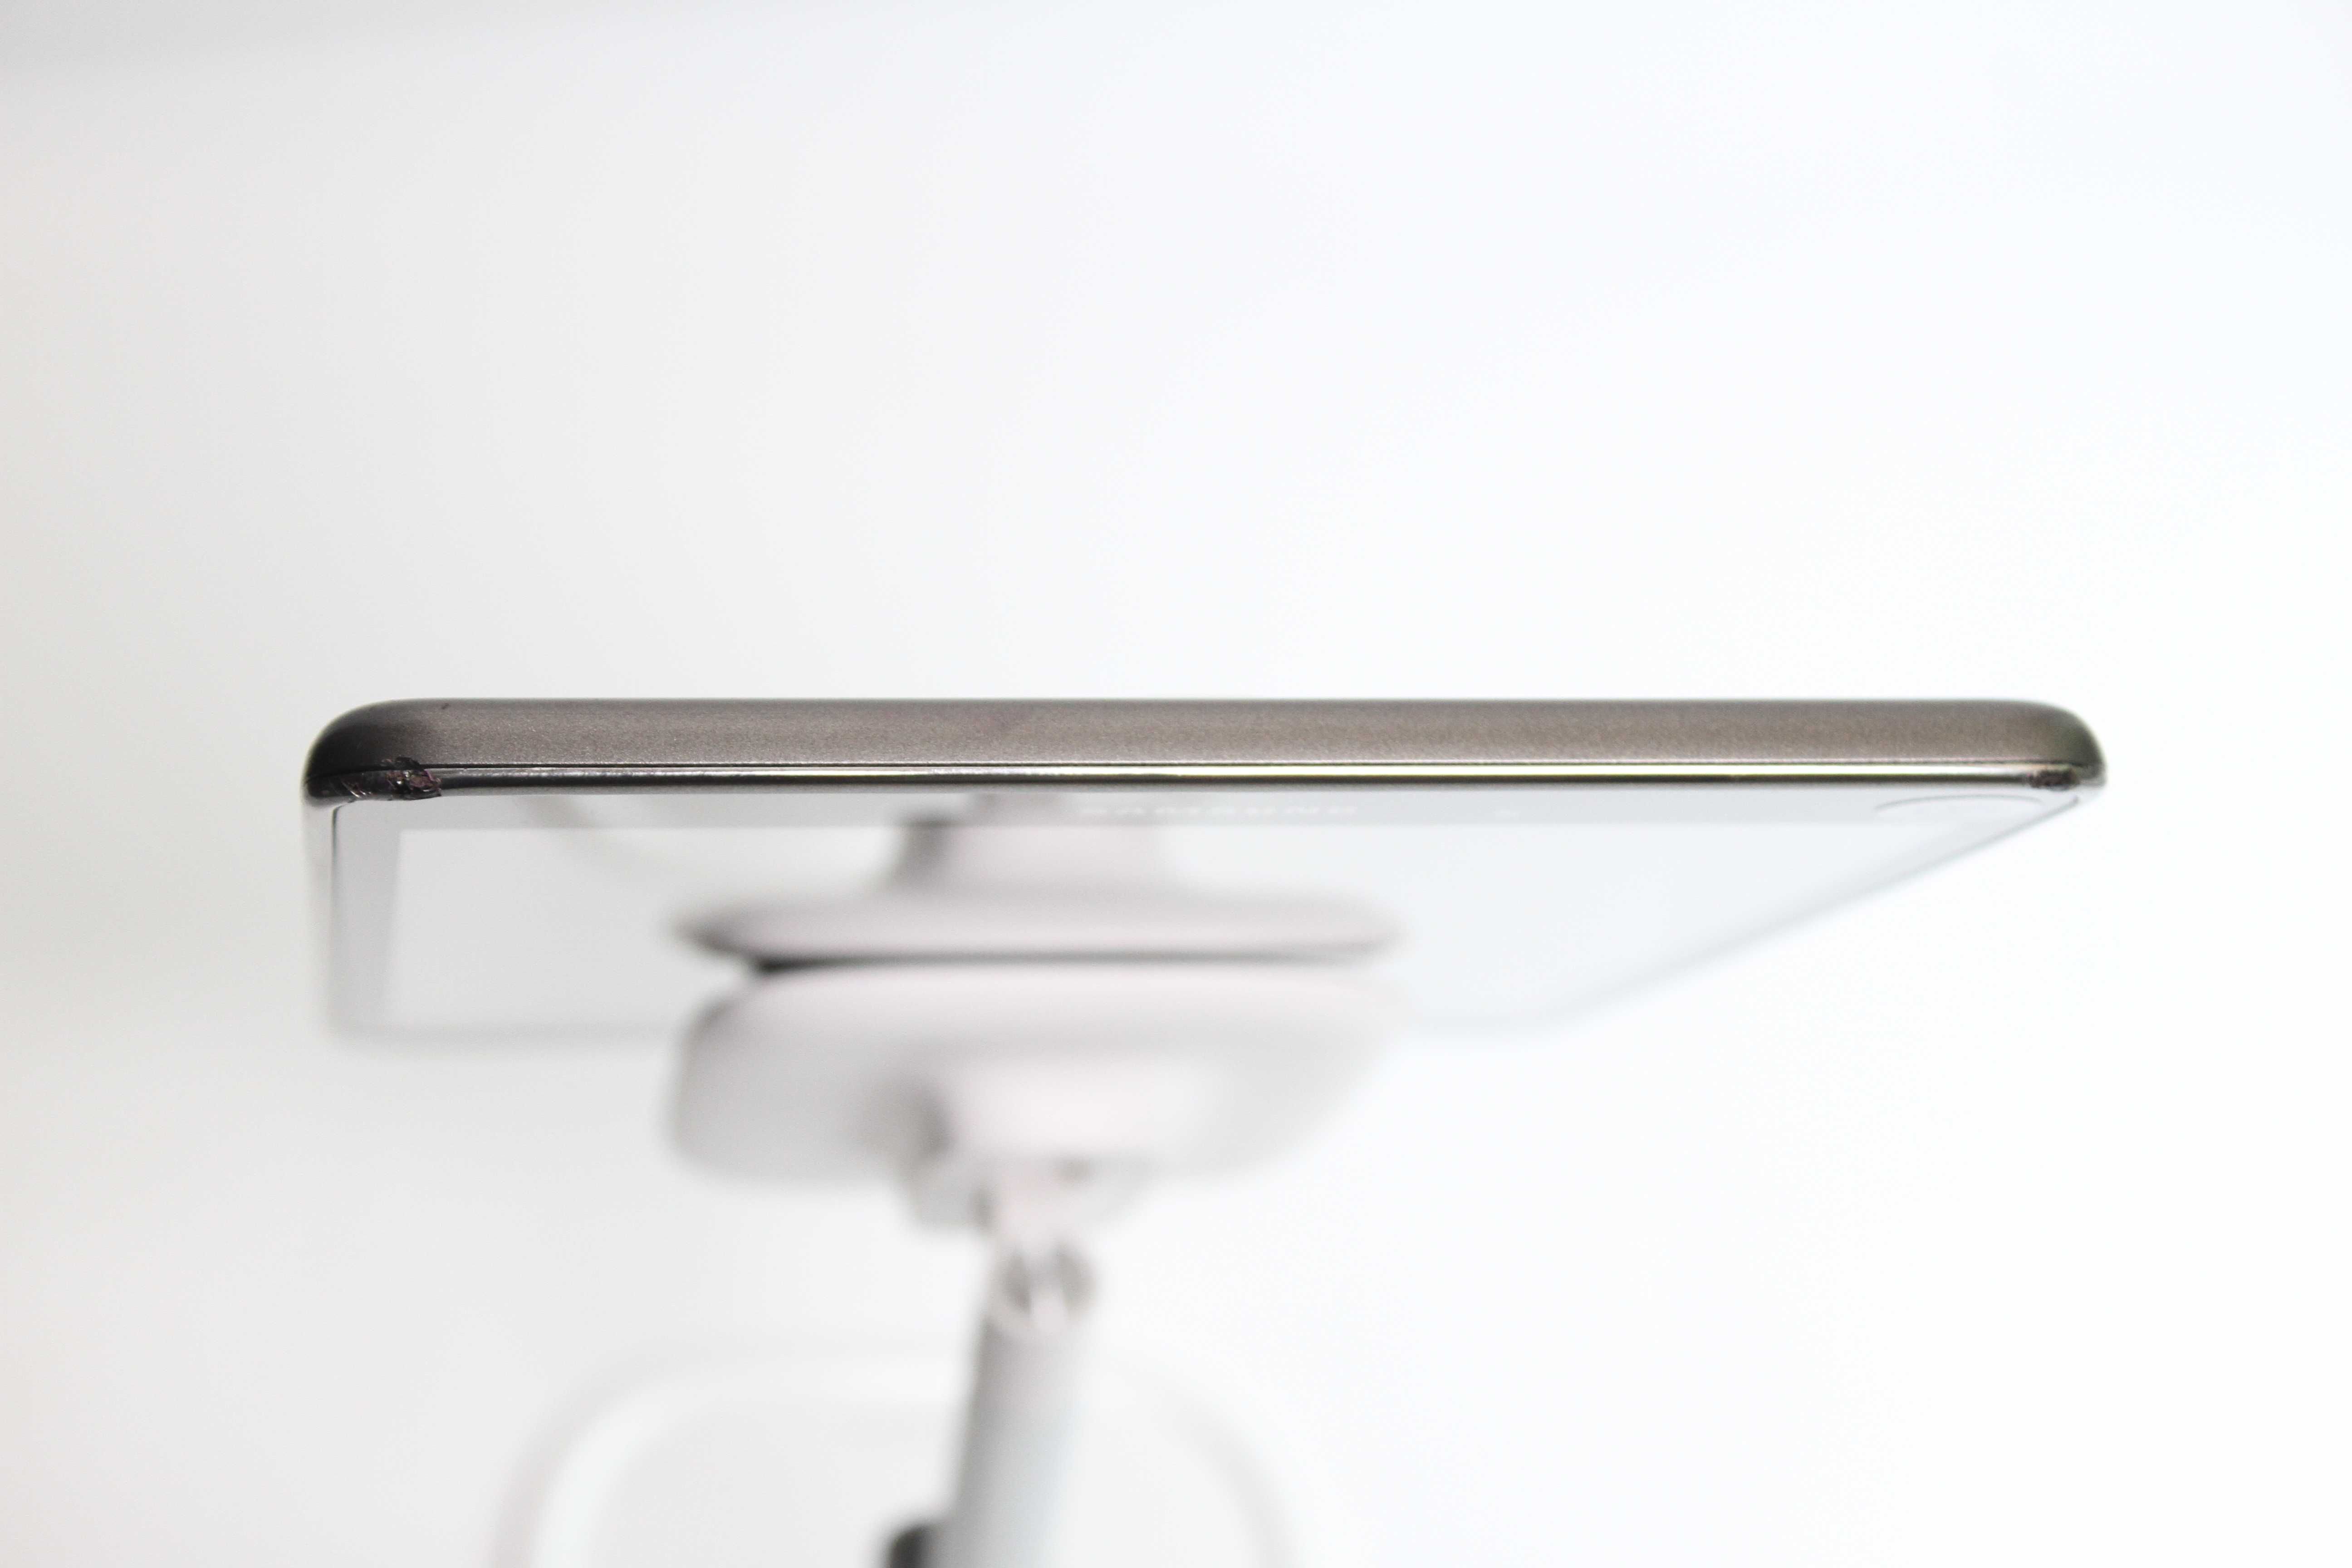 бу планшет Samsung Galaxy Tab A 8.0 (2015) 16Gb SM-T357T